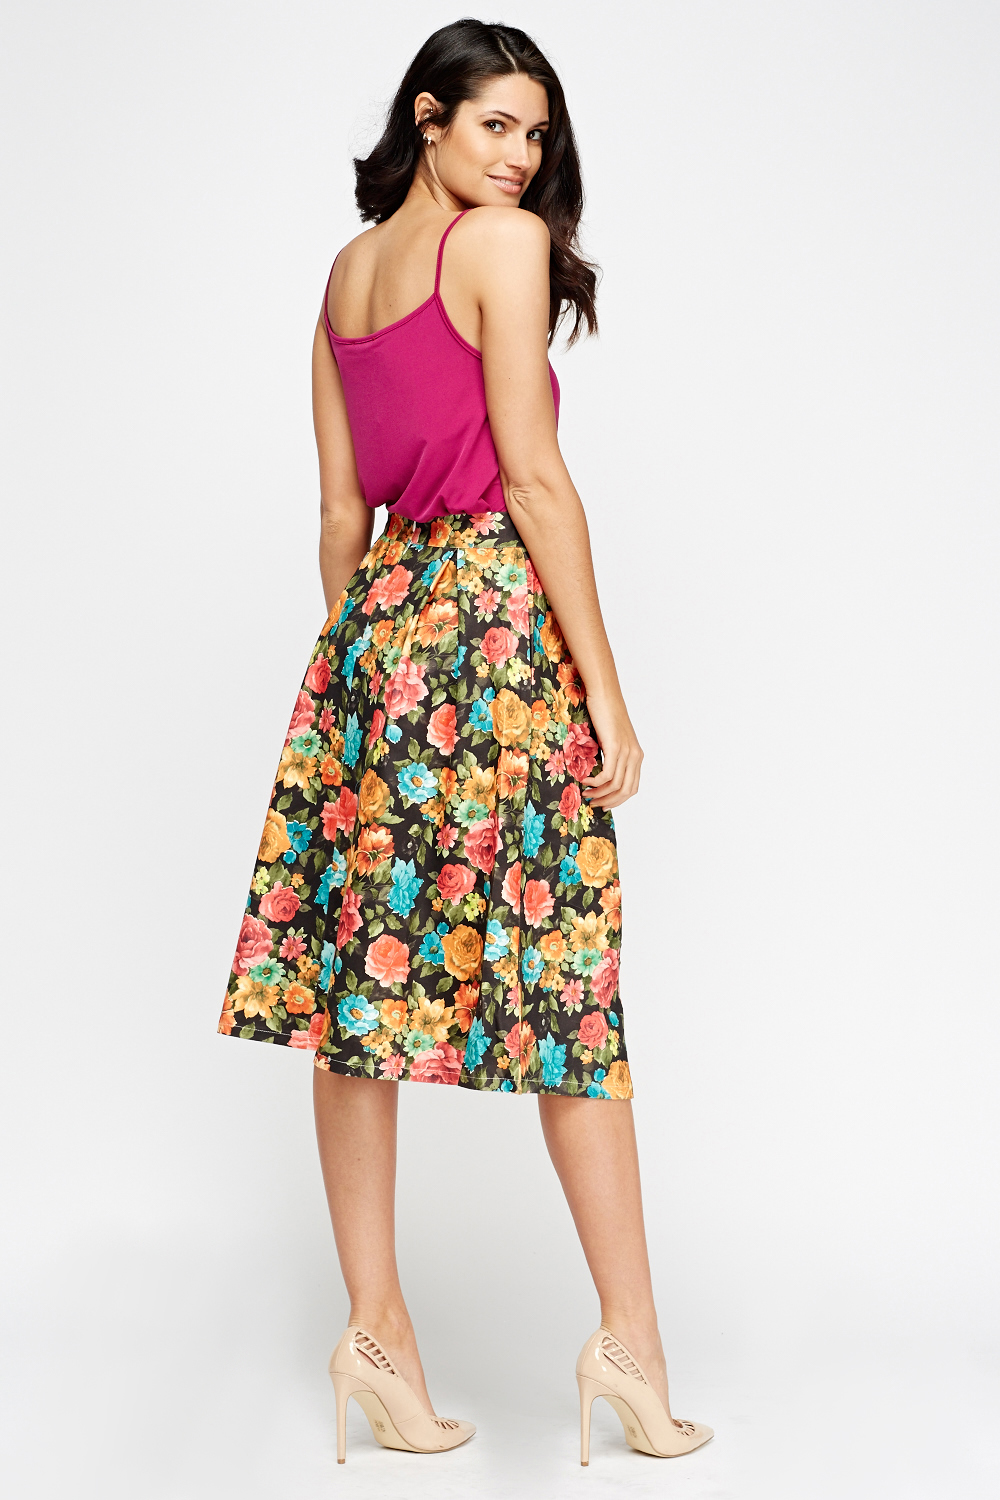 Floral Print High Waist Midi Skirt - Just $6